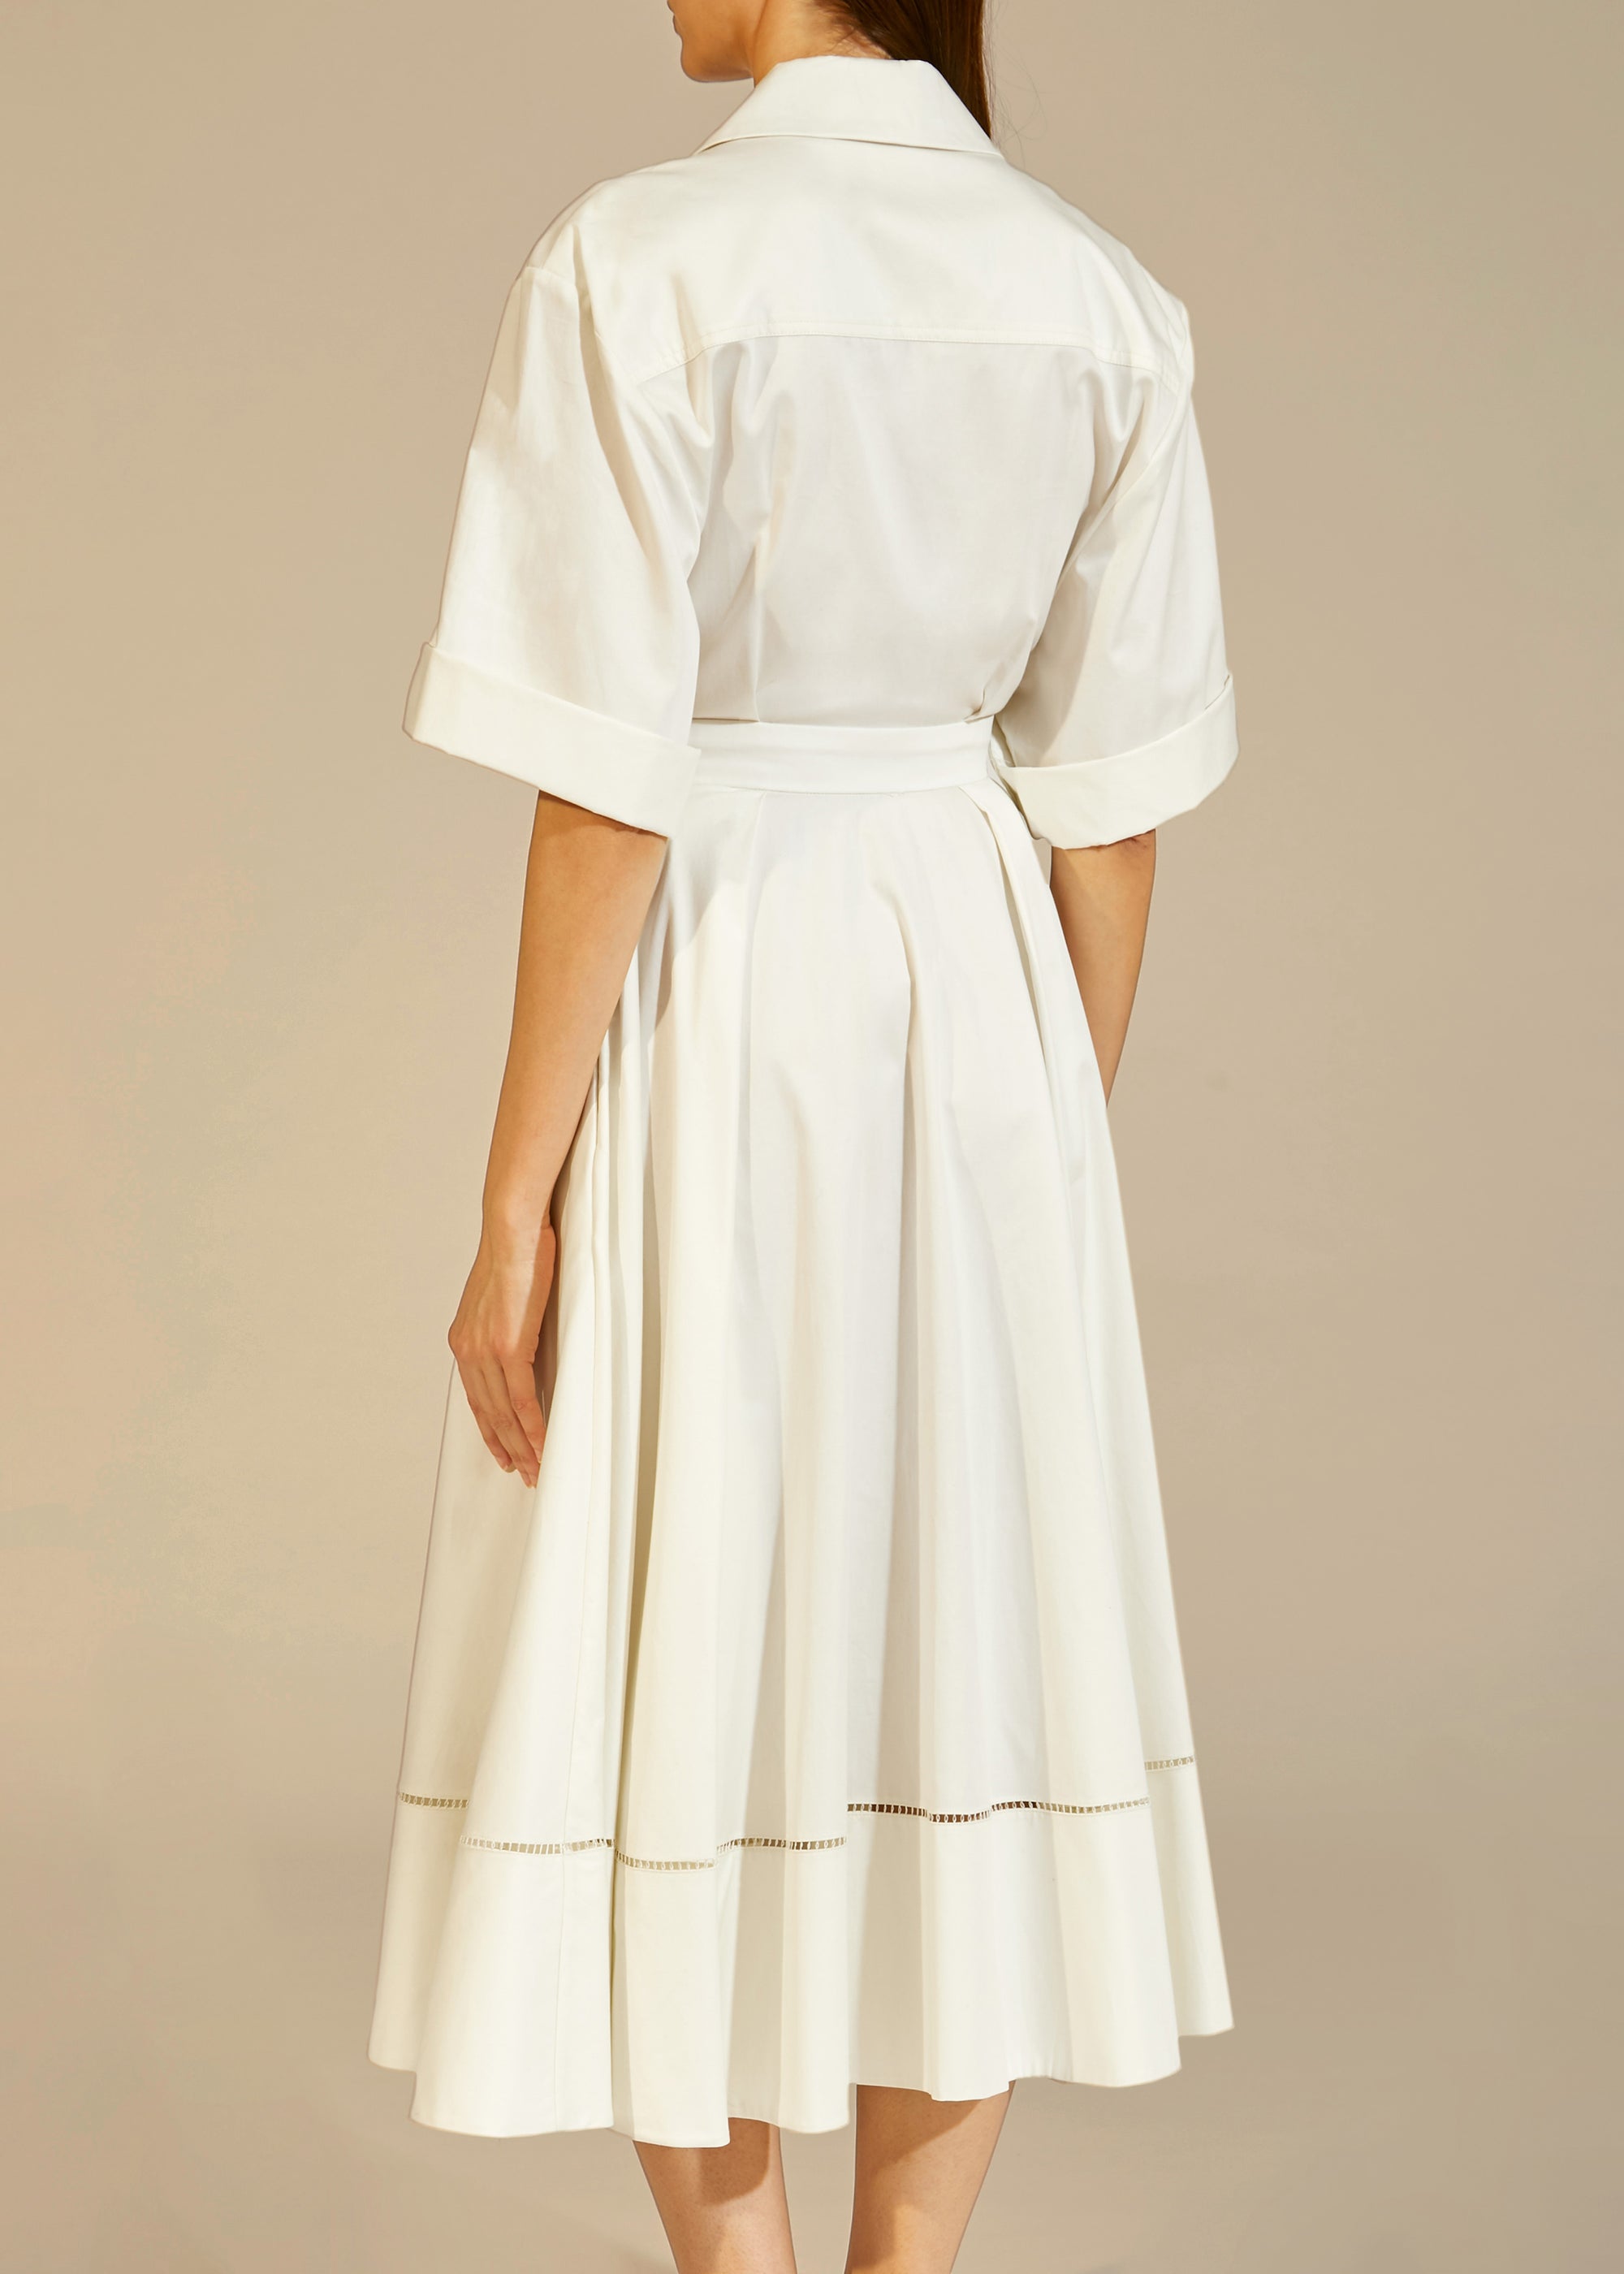 Chloe dress - White